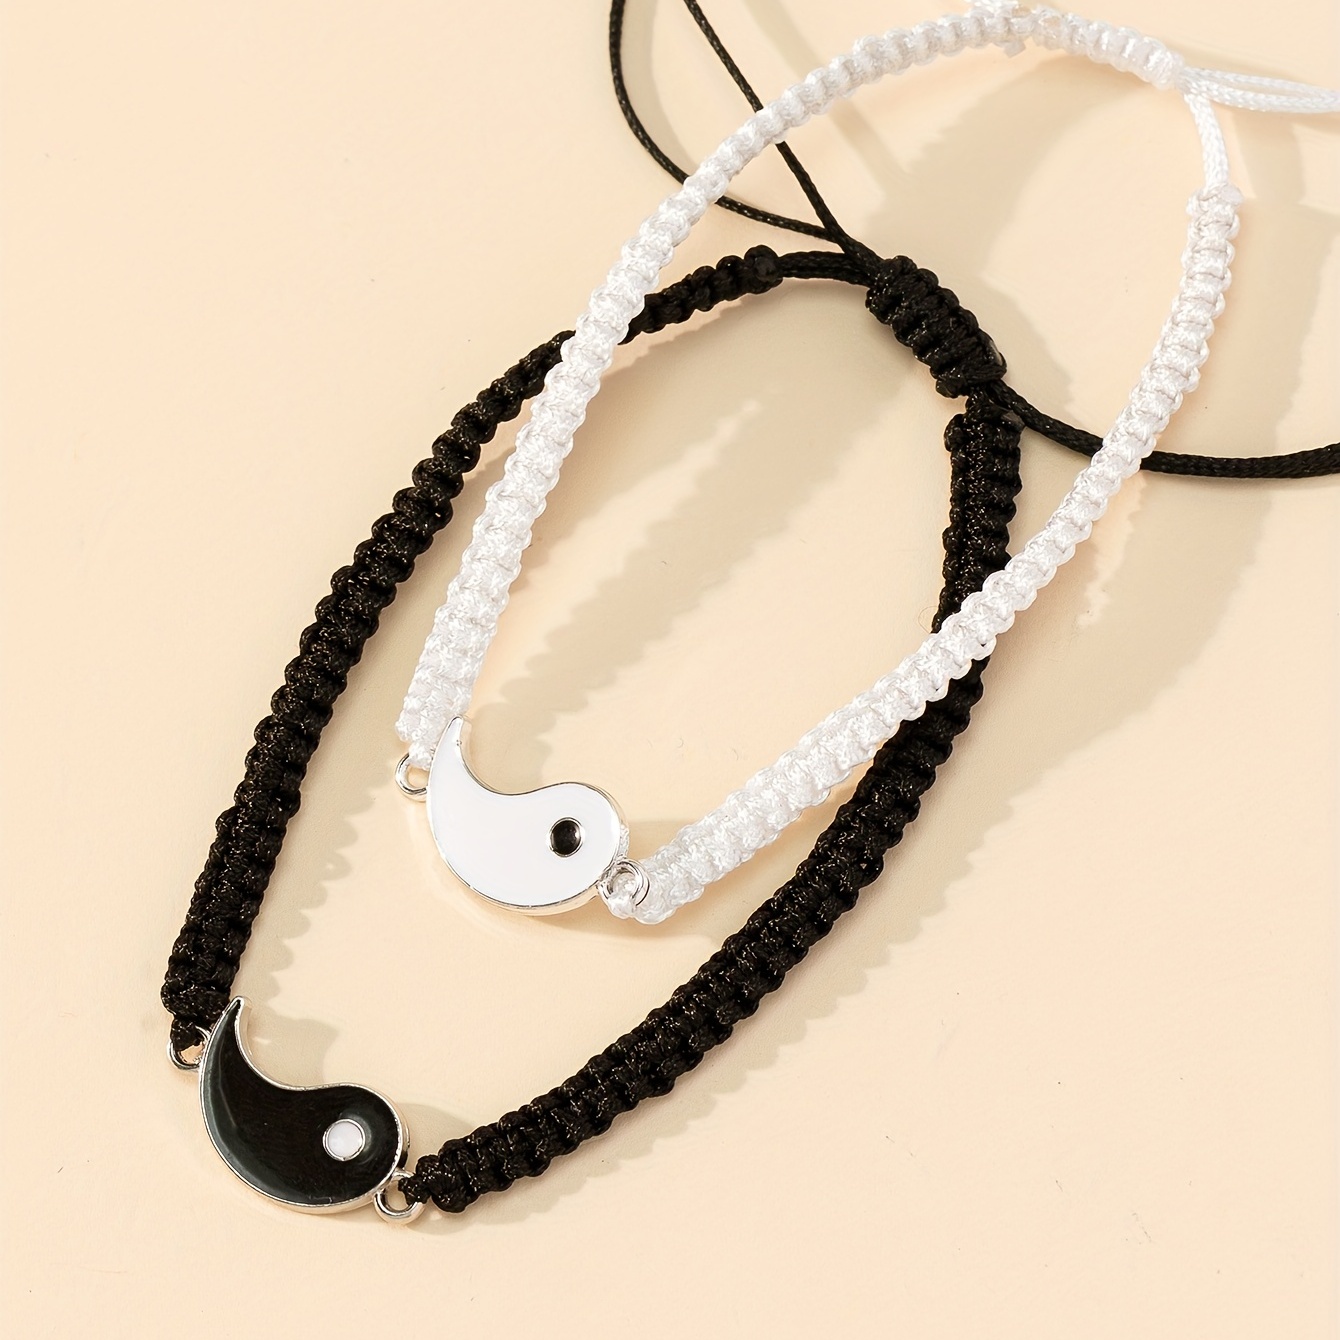 Yin Yang Adjustable String Bracelets 1 Bracelet